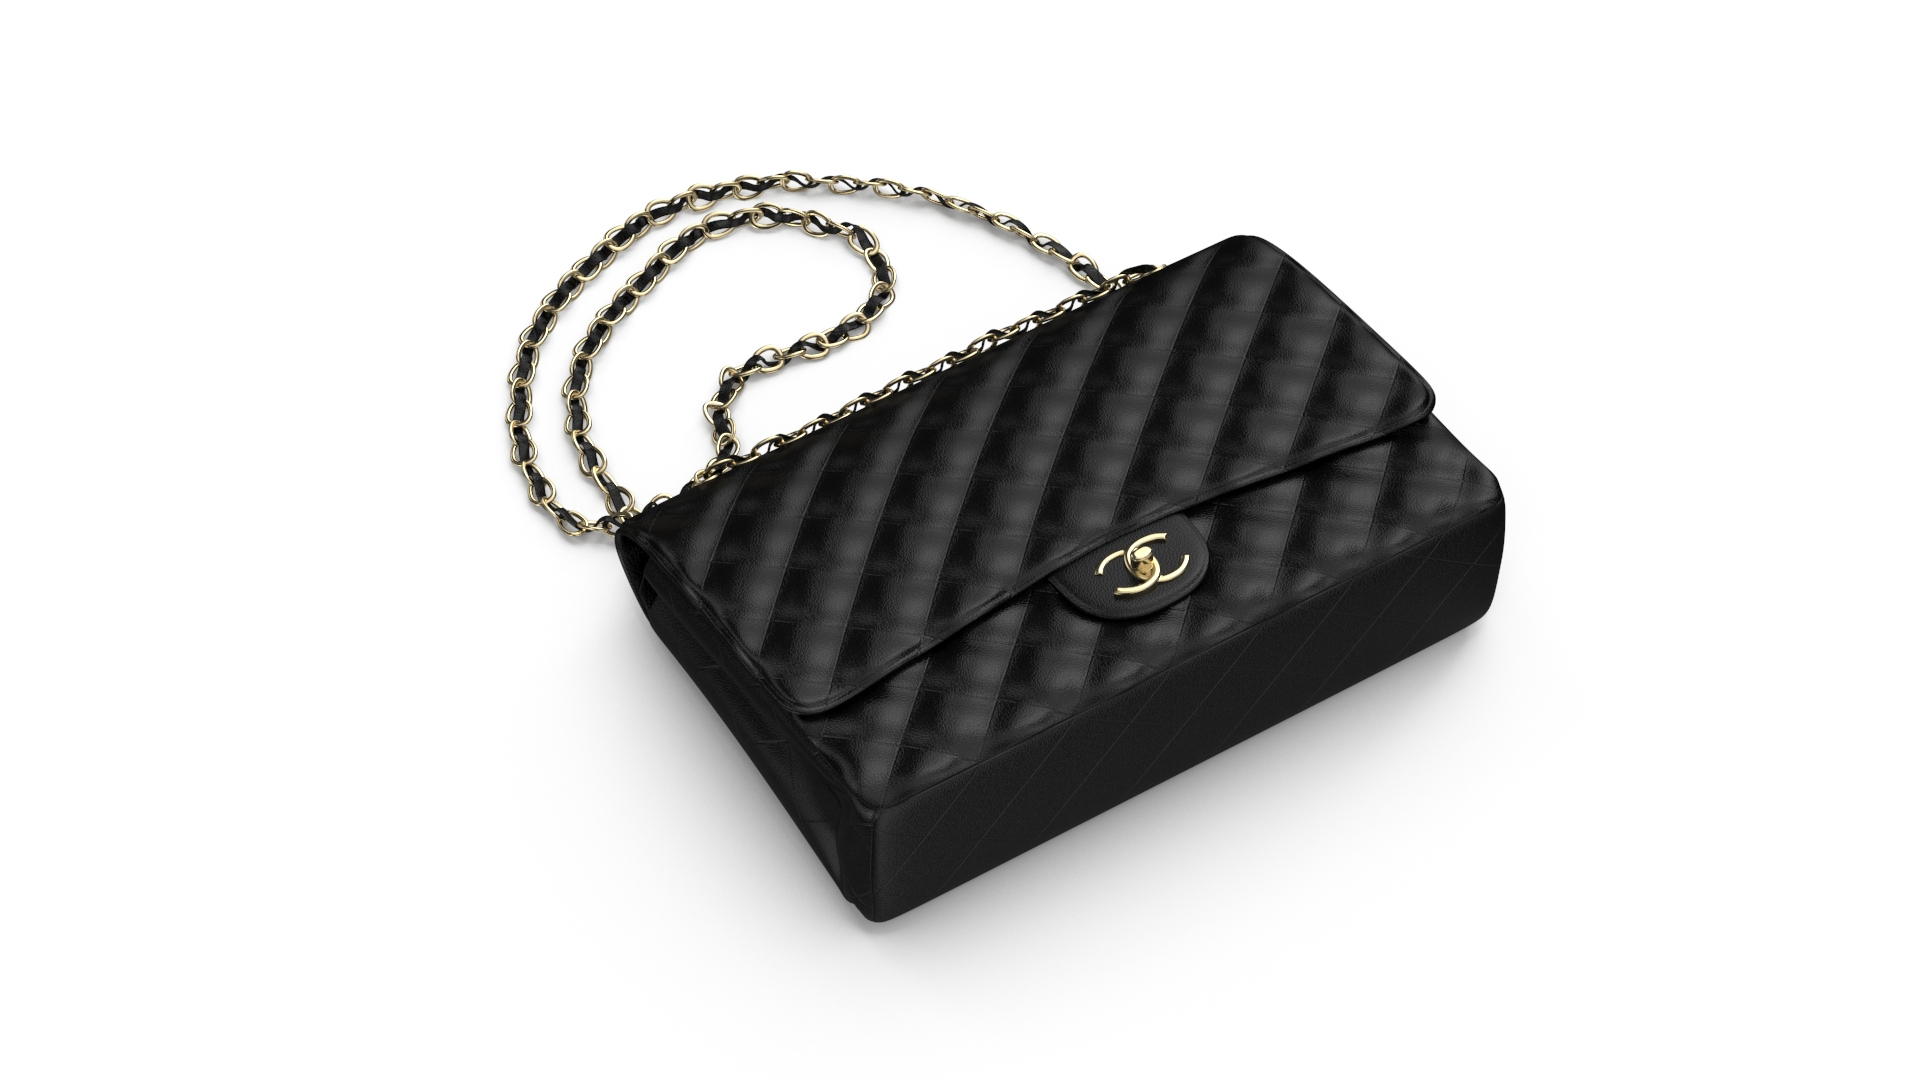 Perfume - Coco Chanel 3D model